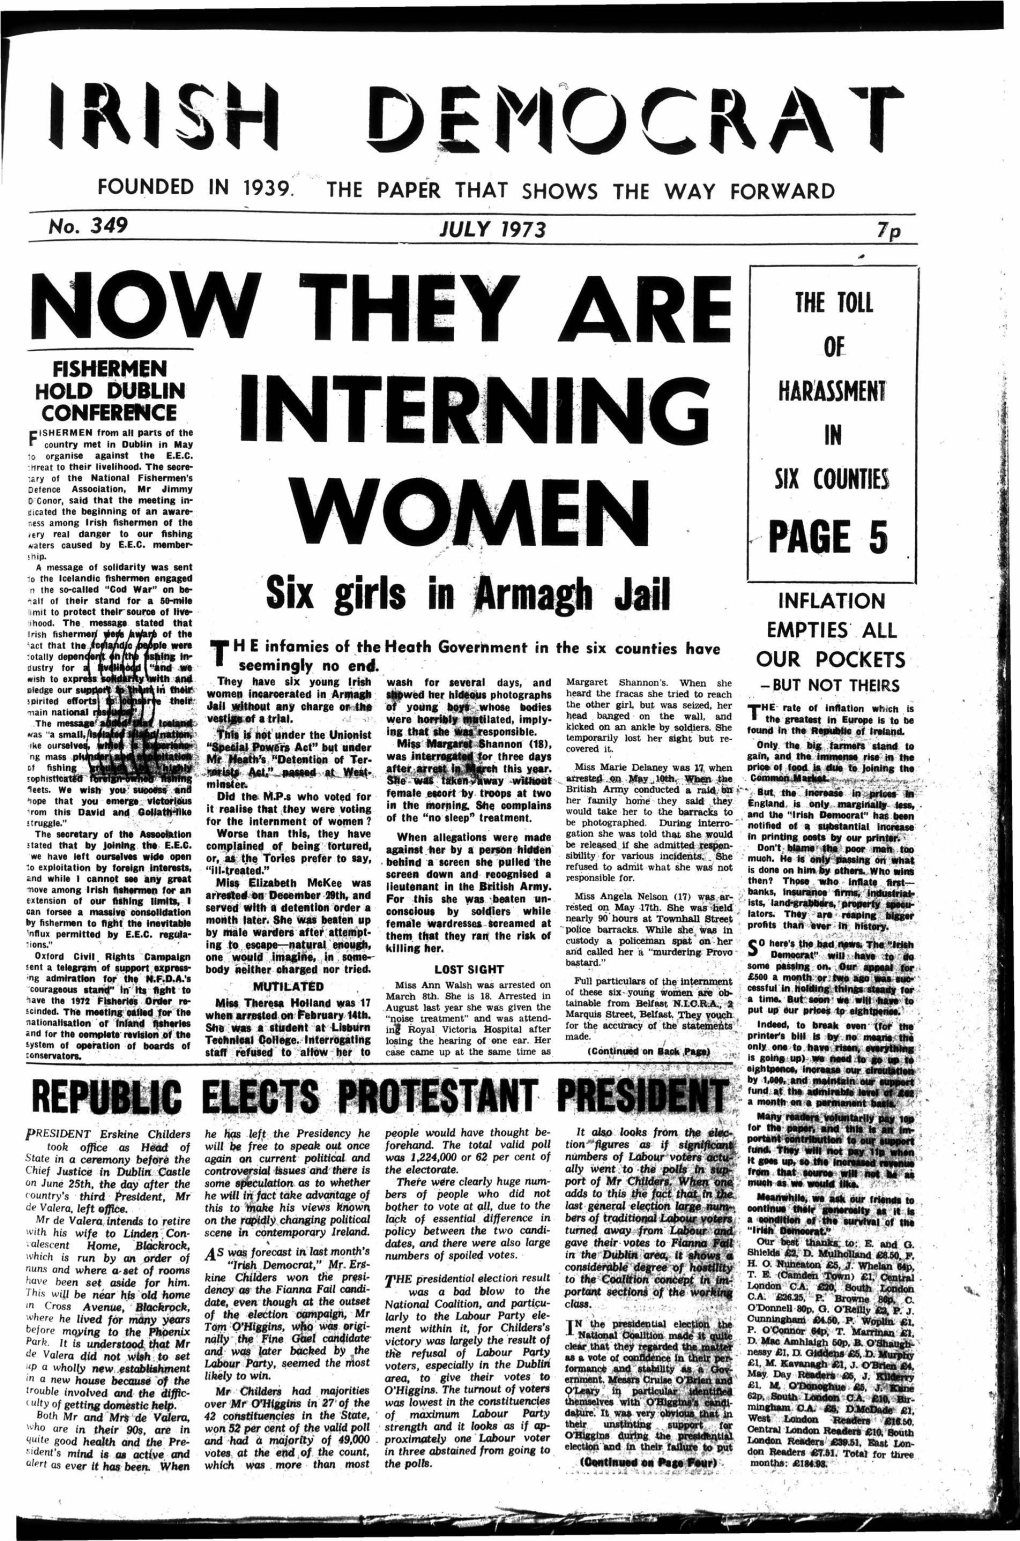 Six Girls in Armagh Jail Lihood